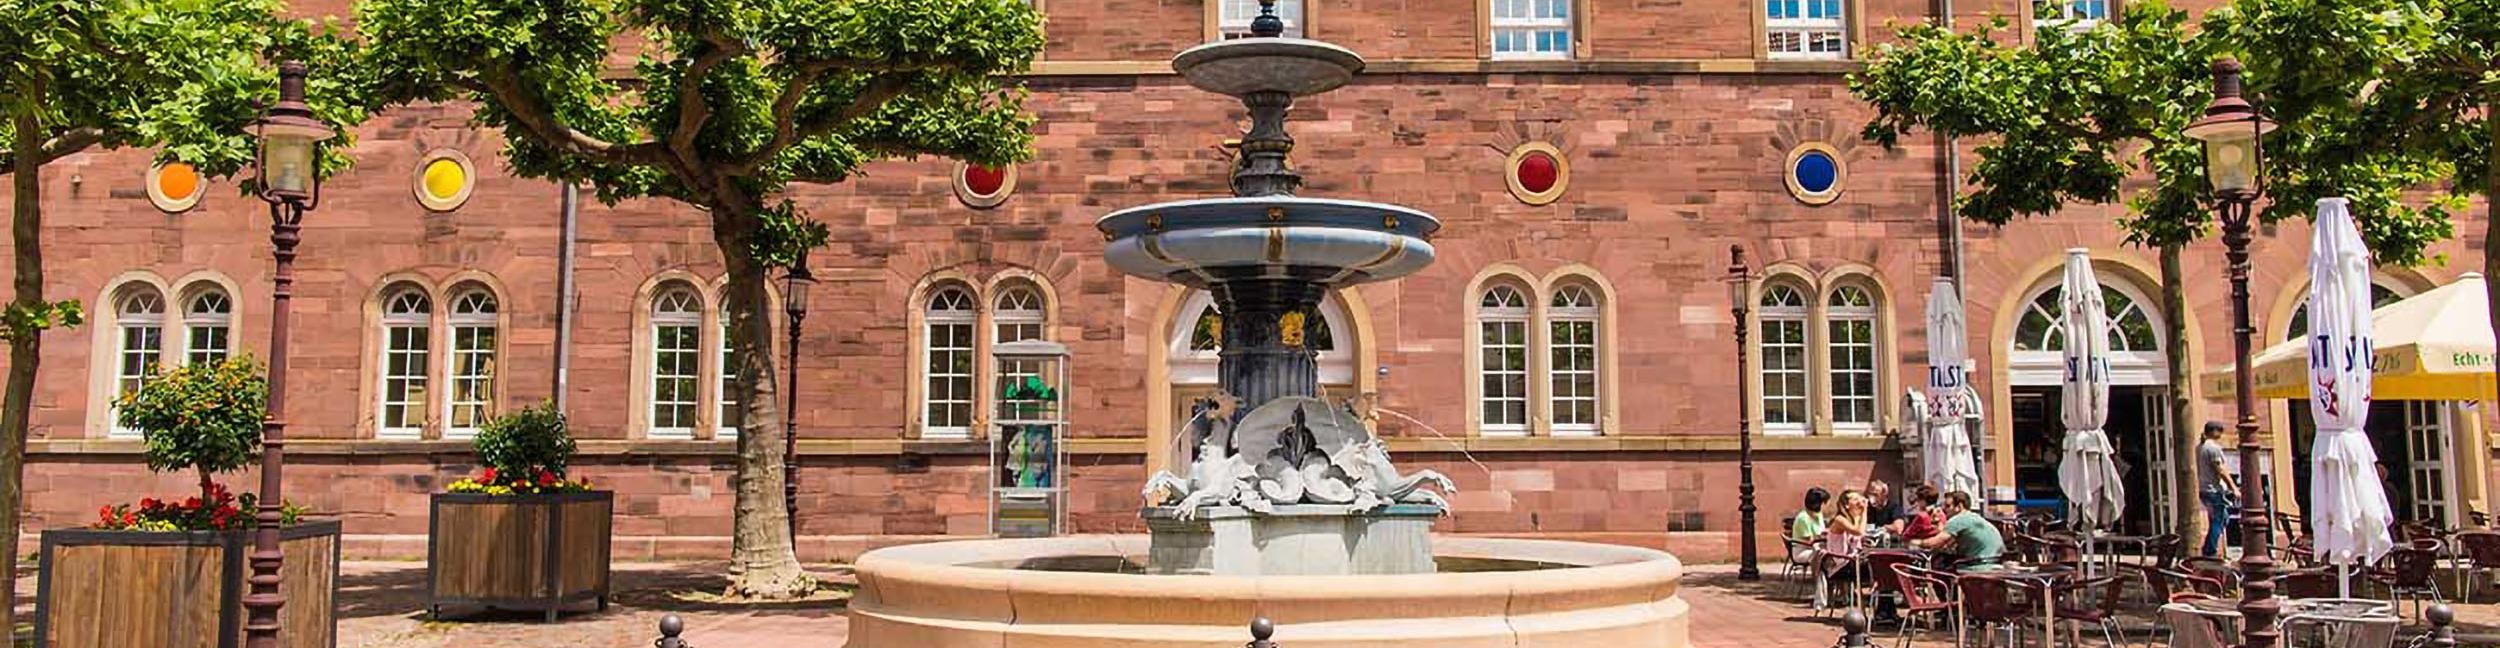 Pfeiffer Fountain in Rastatt